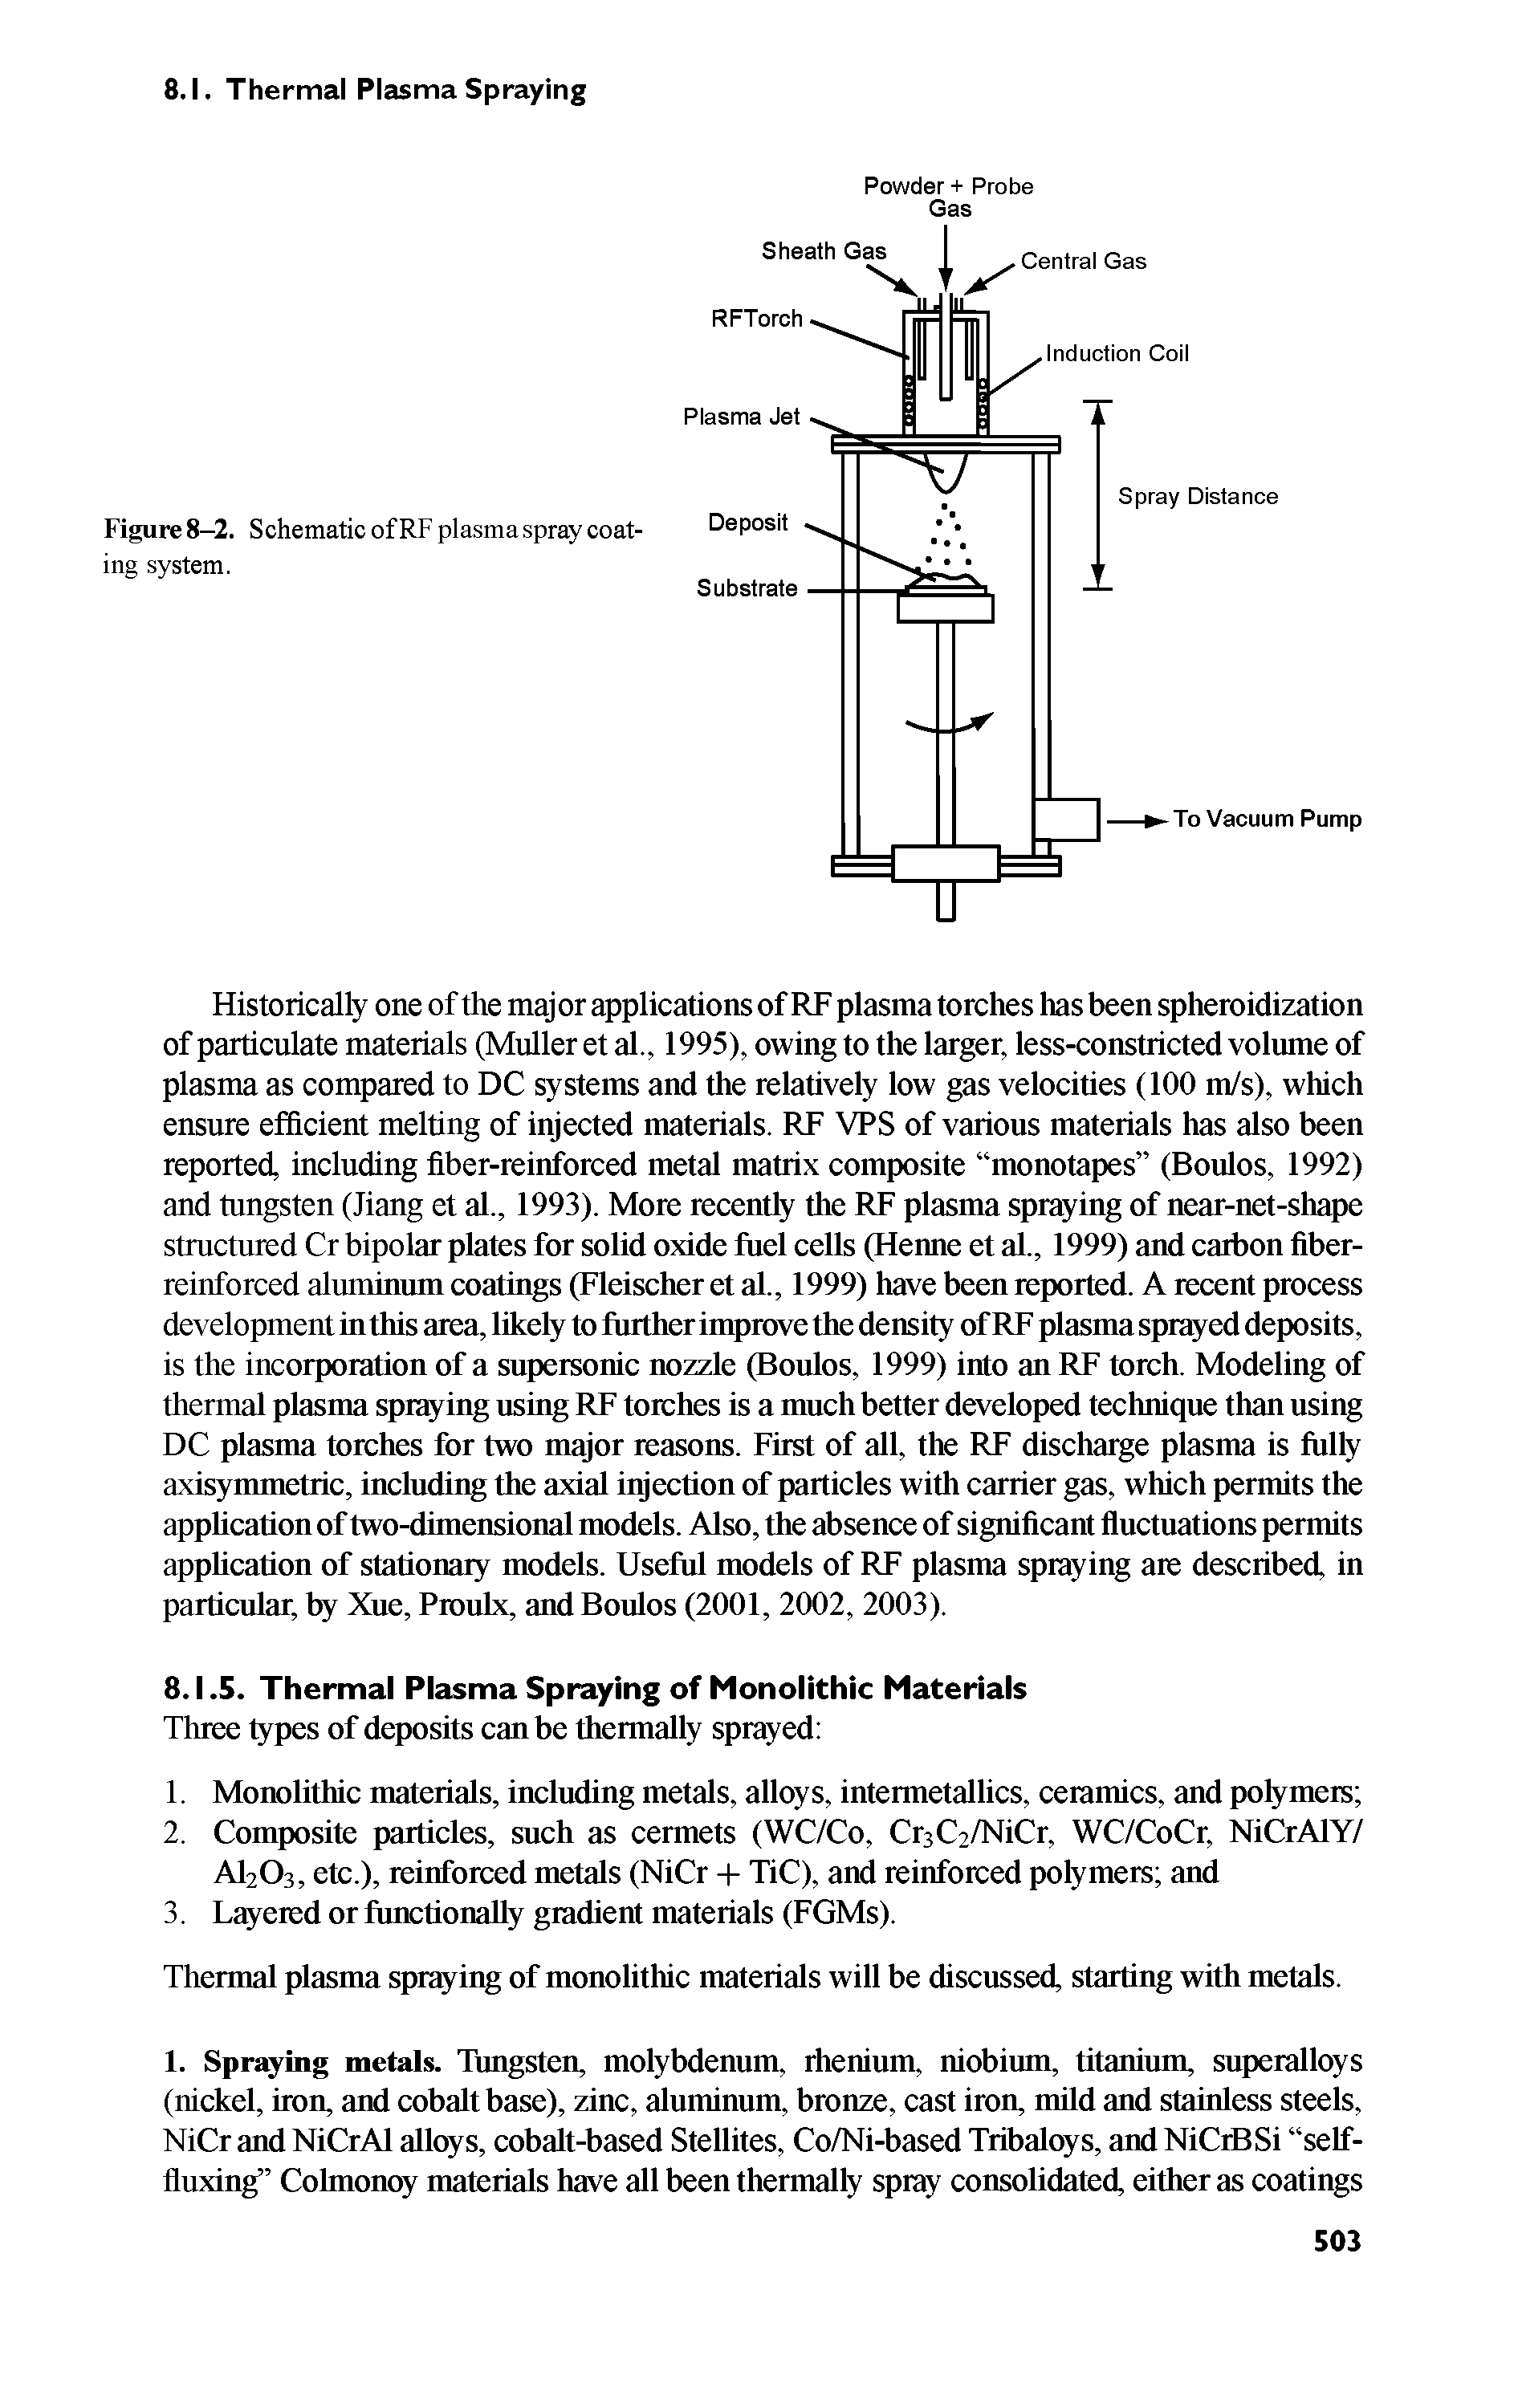 Figure 8-2. Schematic of RF plasma spray coating system.